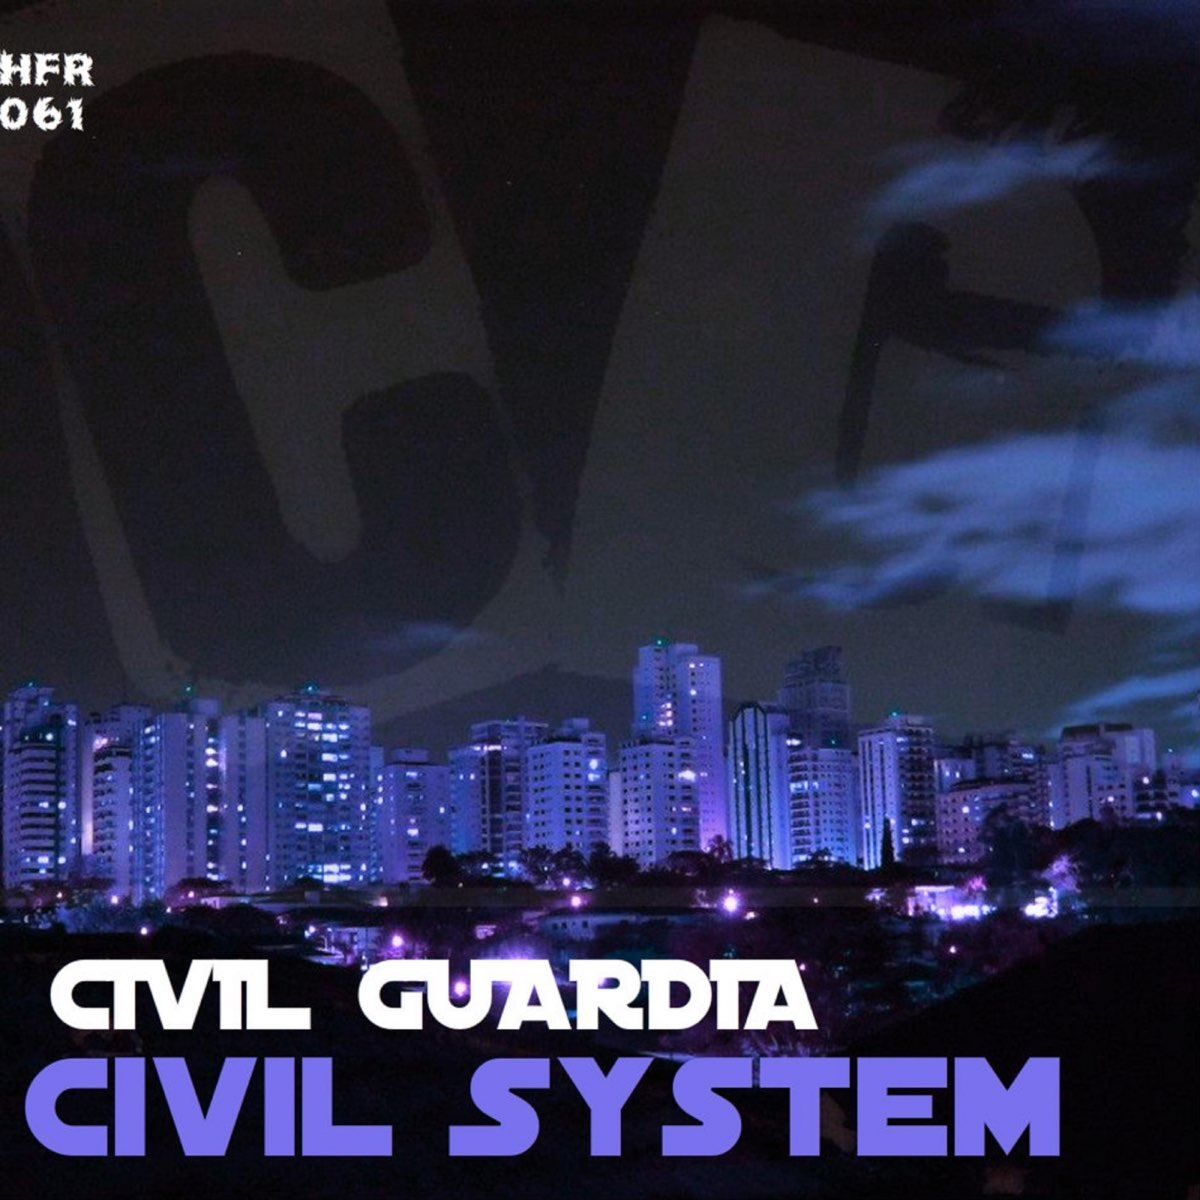 Civil system. Civil Systems.